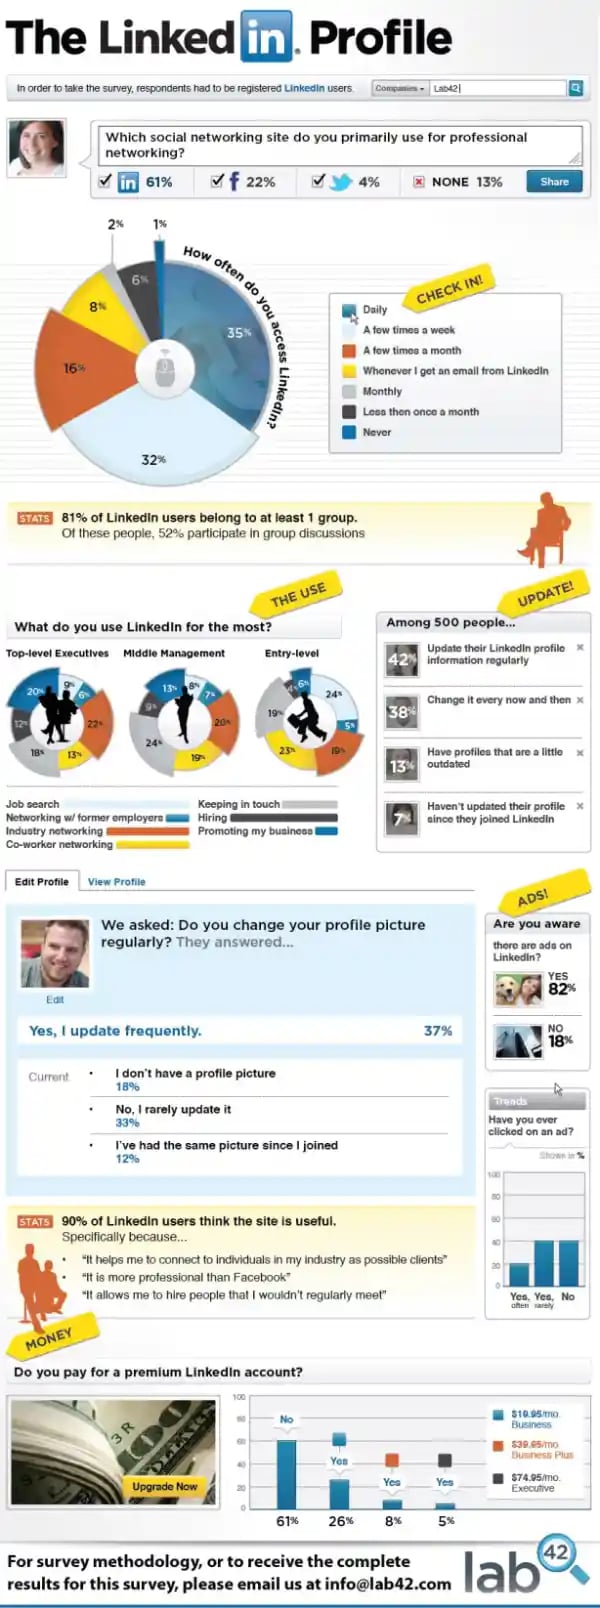 linkedin infographic resized 600